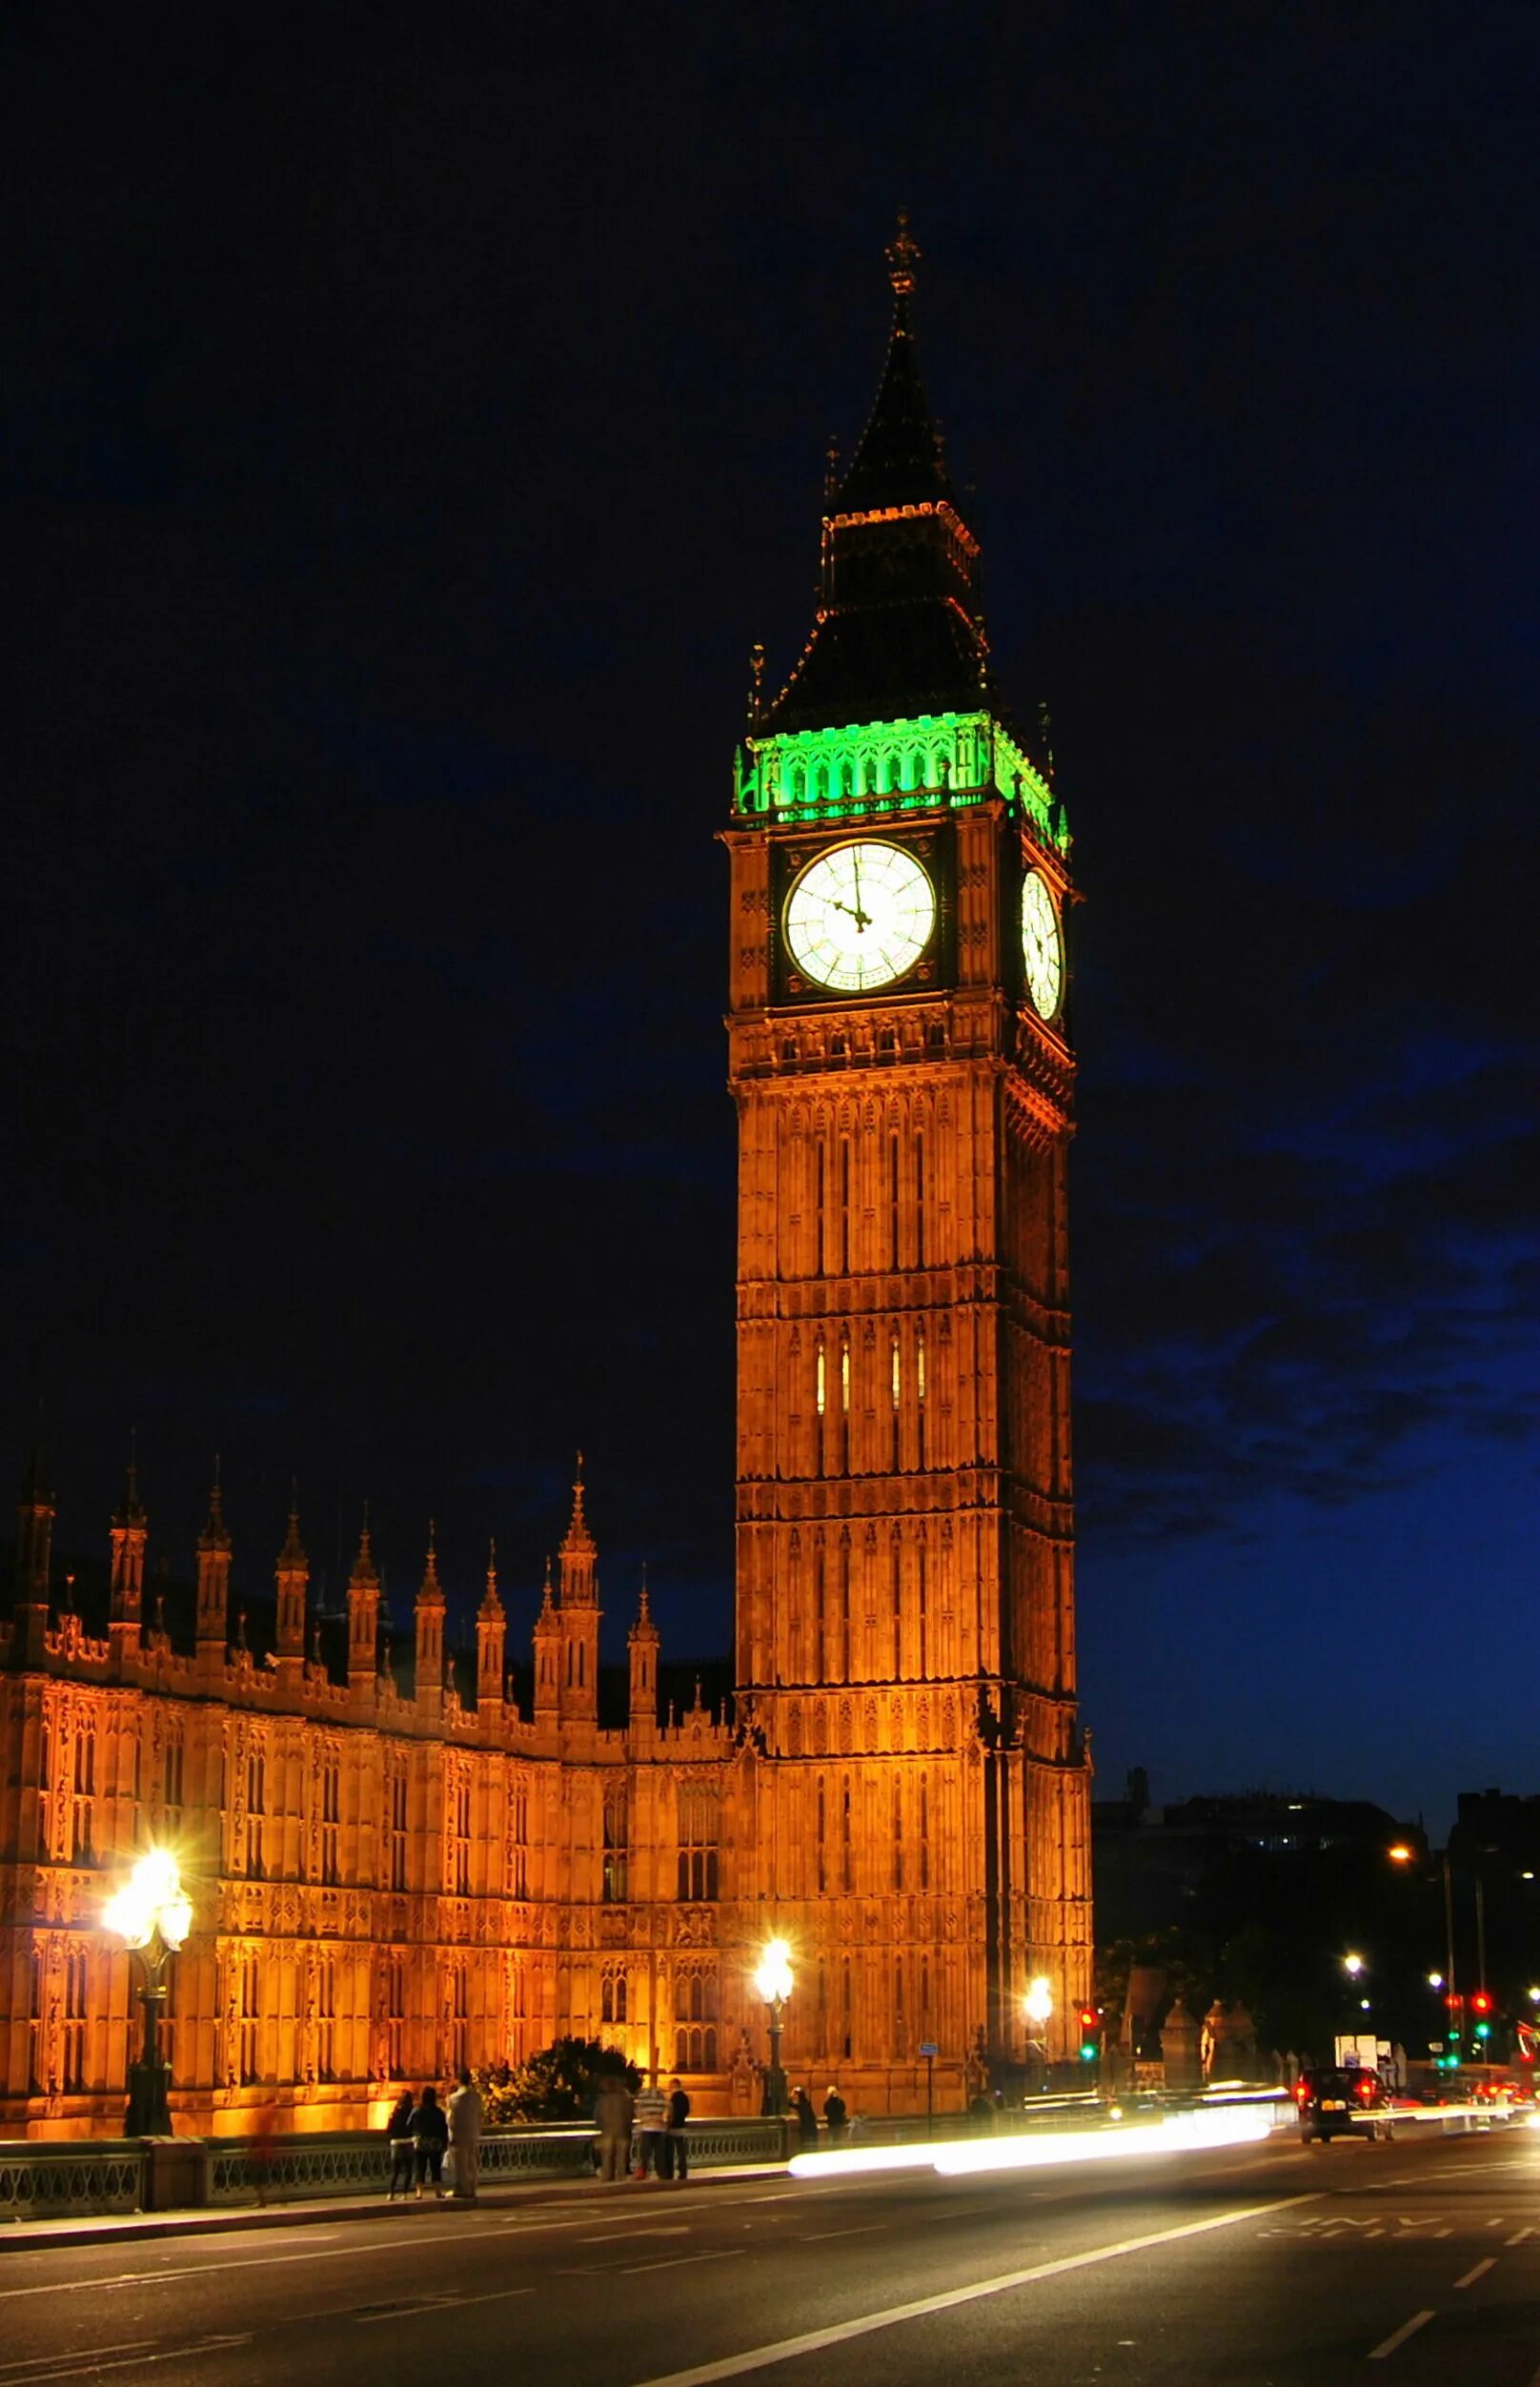 Watching britain. Башня Биг Бен в Лондоне. Биг-Бен (башня Елизаветы). Часовая башня Вестминстерского дворца. Часовая башня Биг Бен.